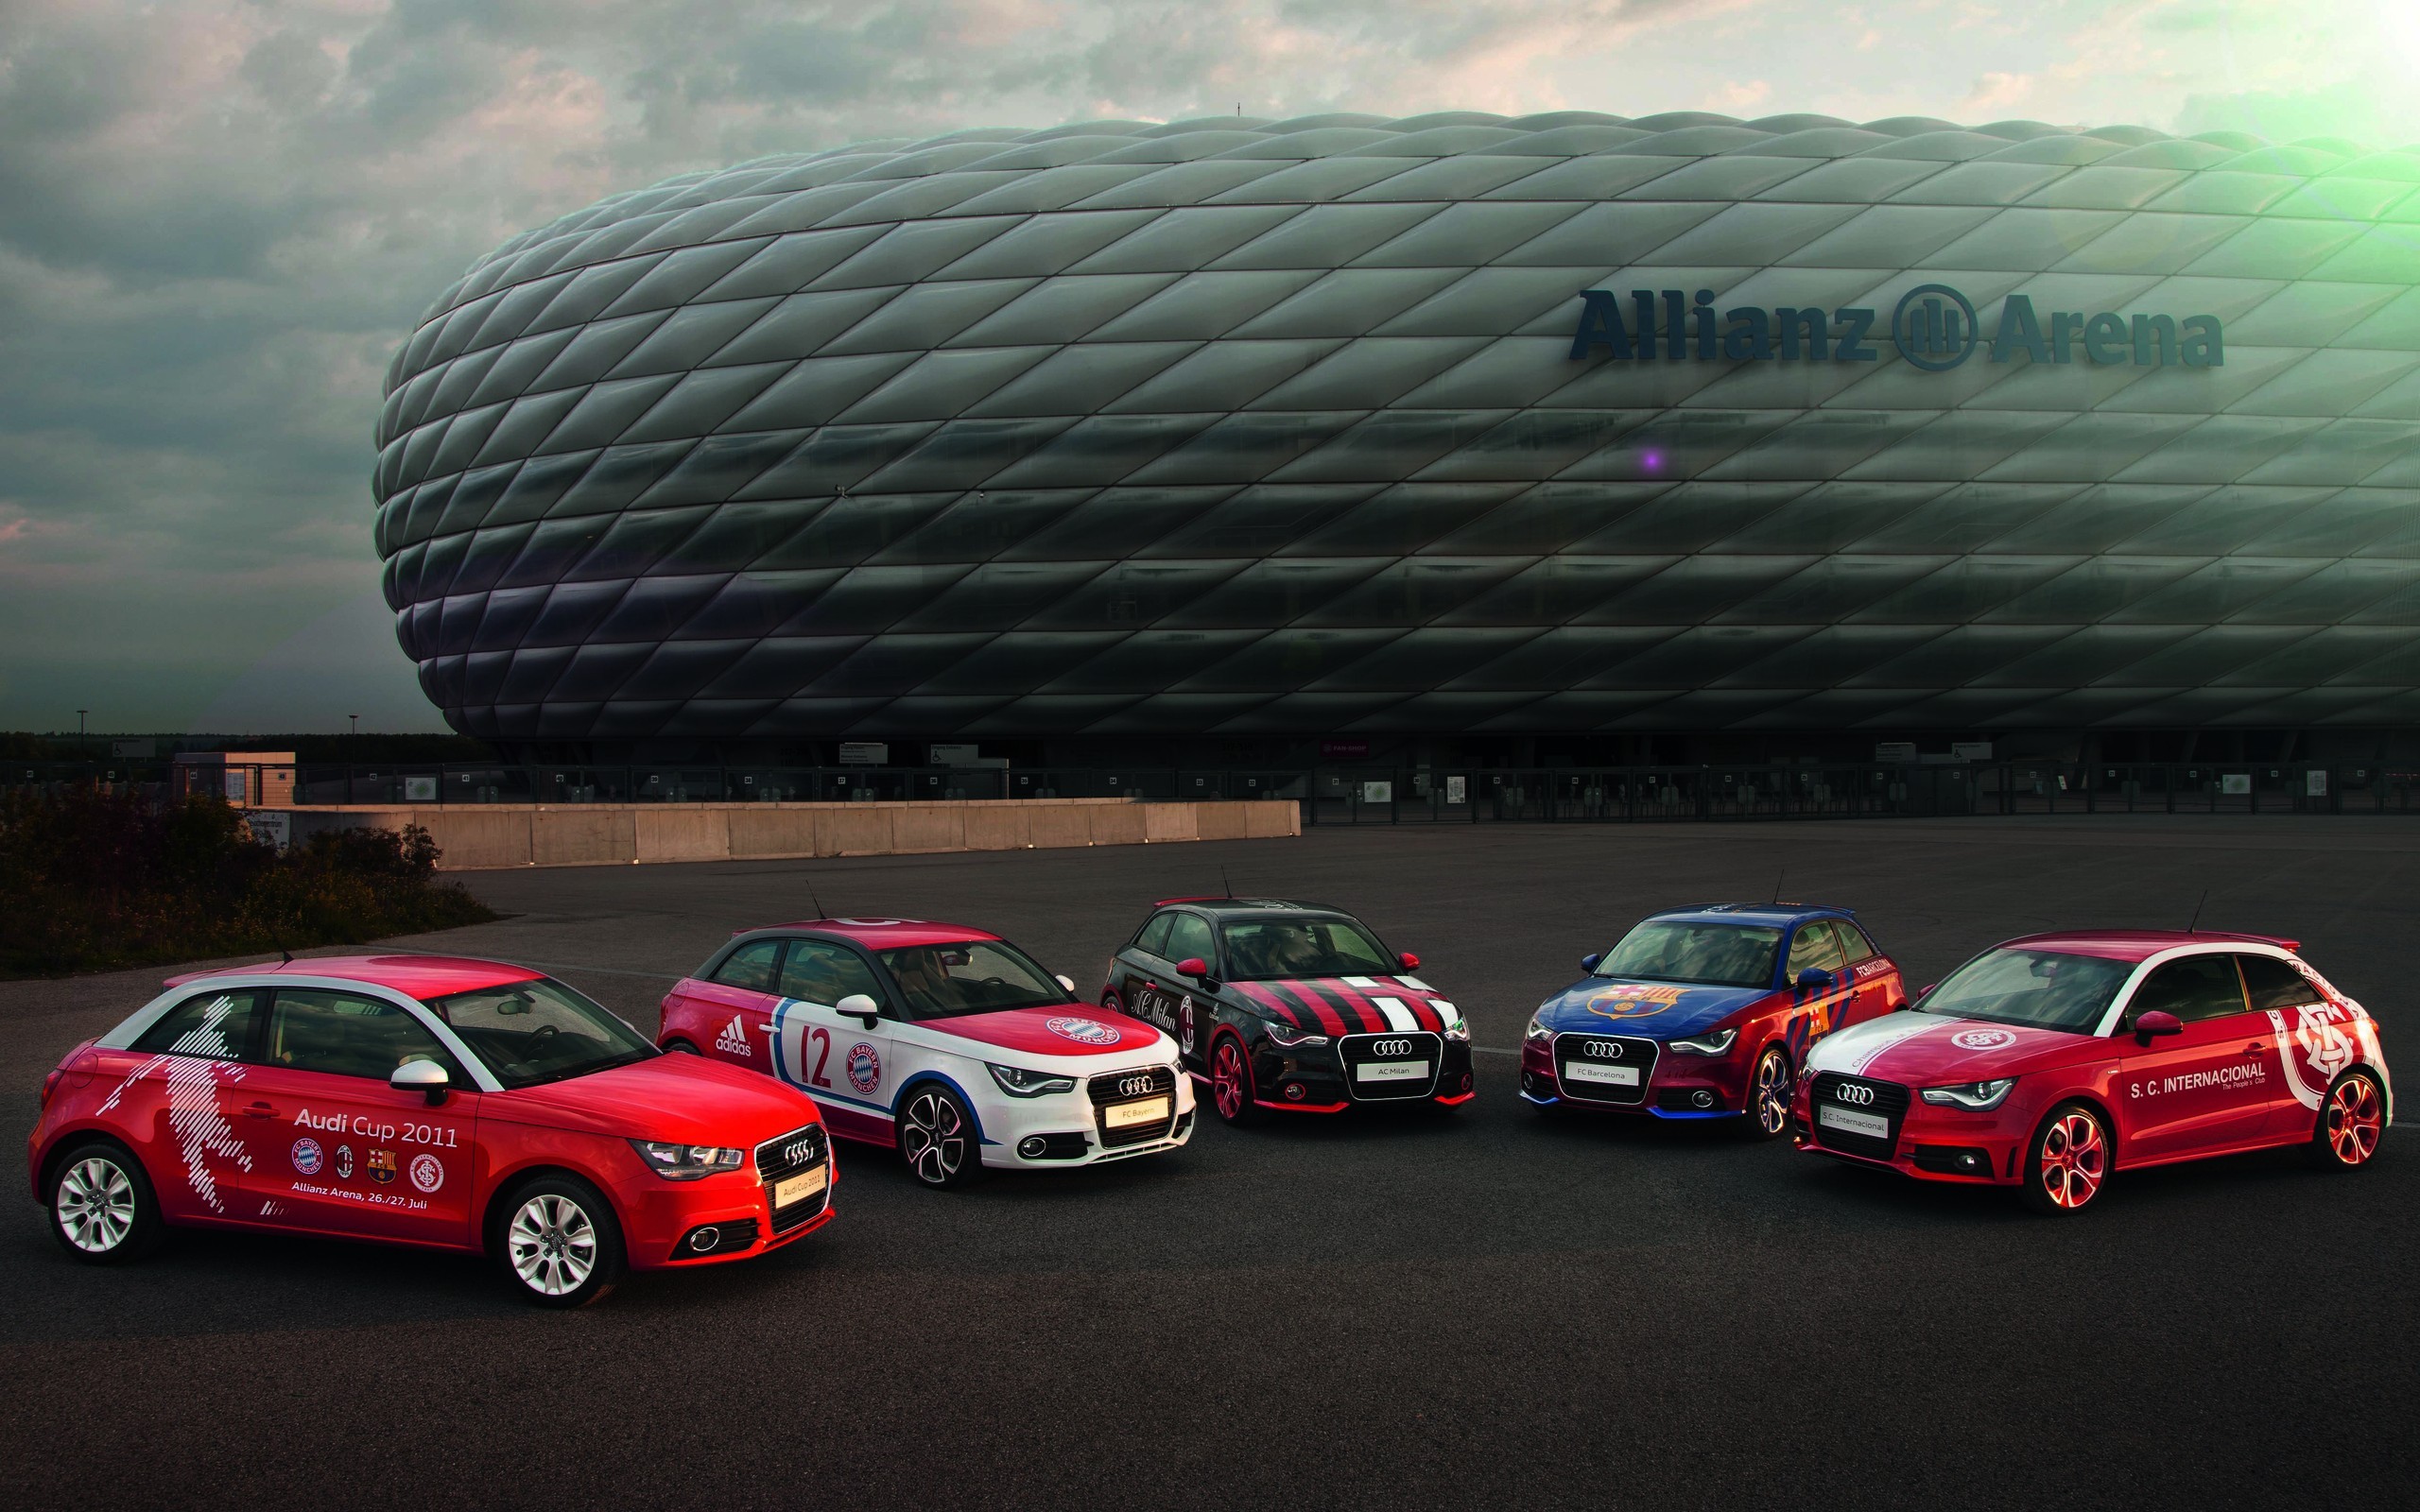 General 2560x1600 car Audi A1 Allianz Arena  Audi red cars Munich Germany black cars 2011 (Year) stadium vehicle